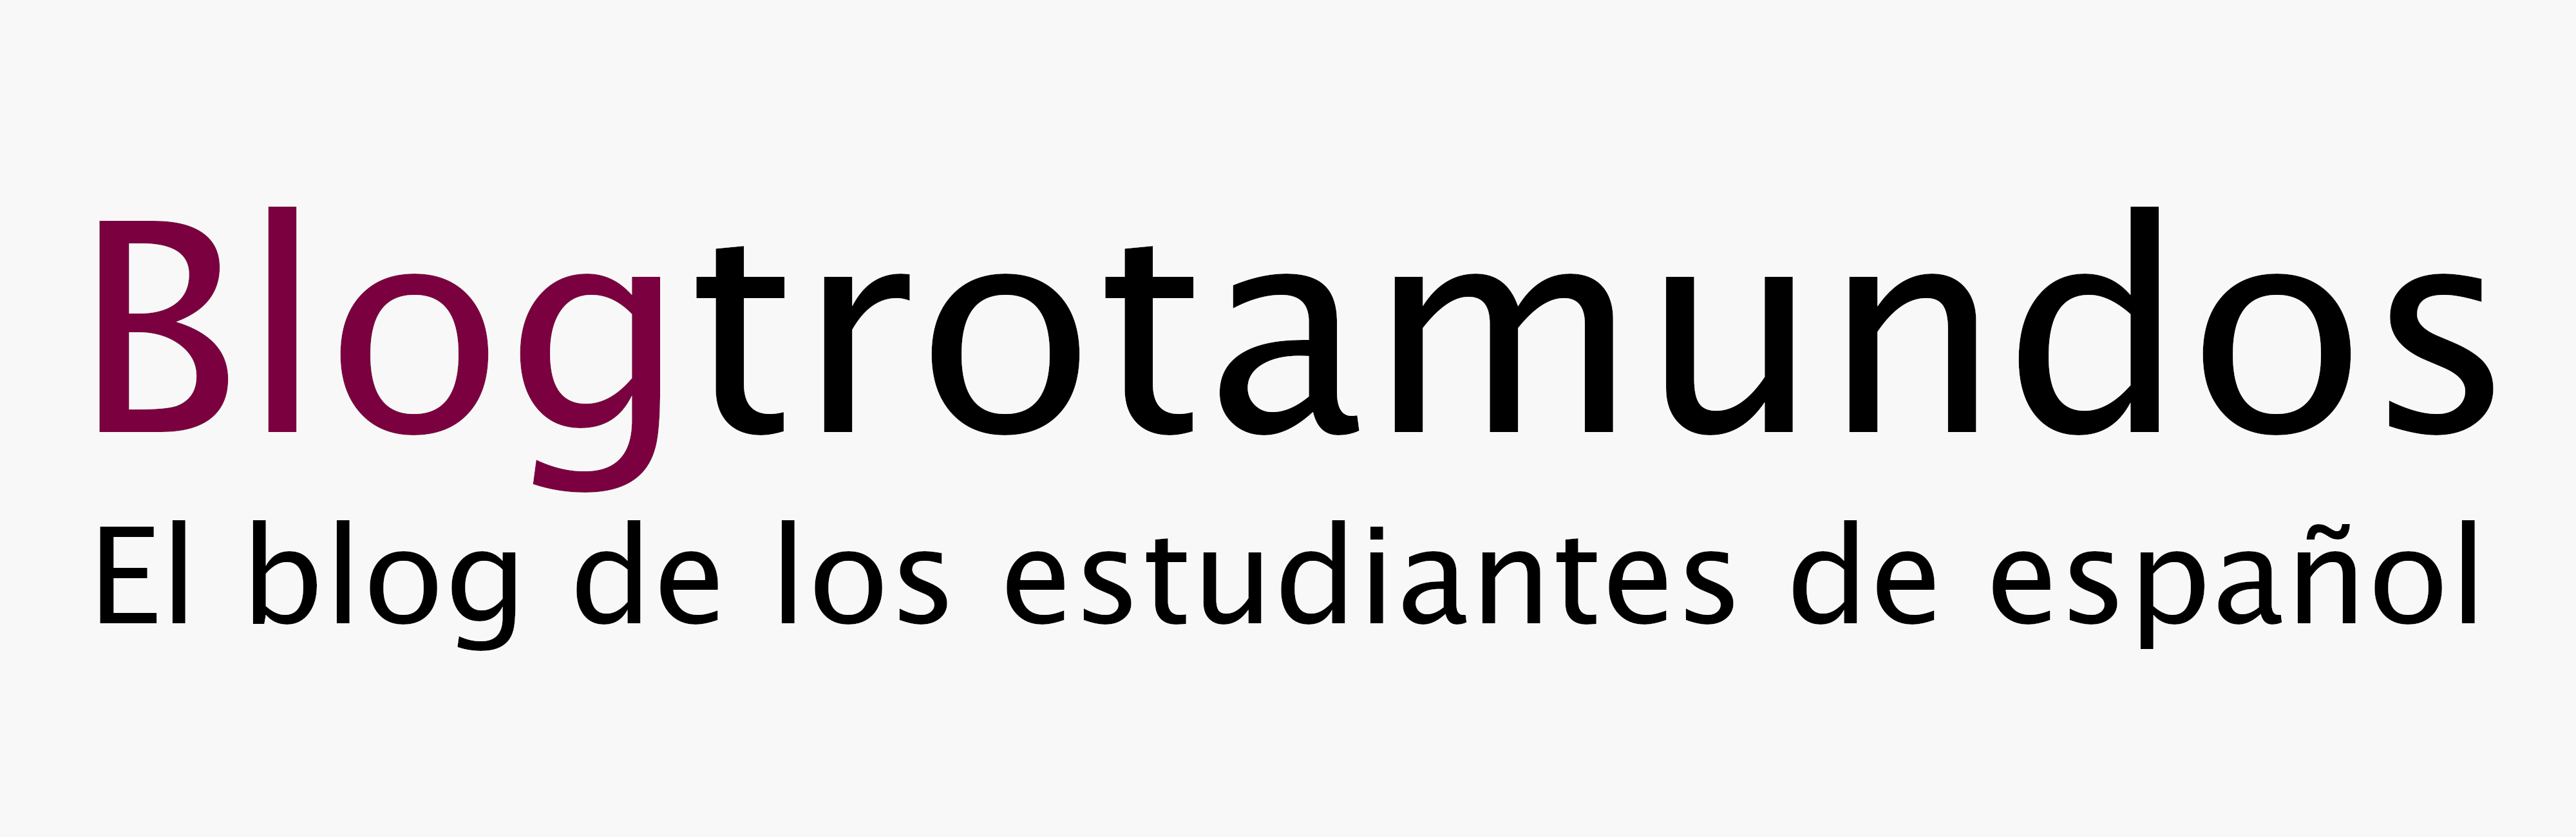 Blogtrotatmundos-II